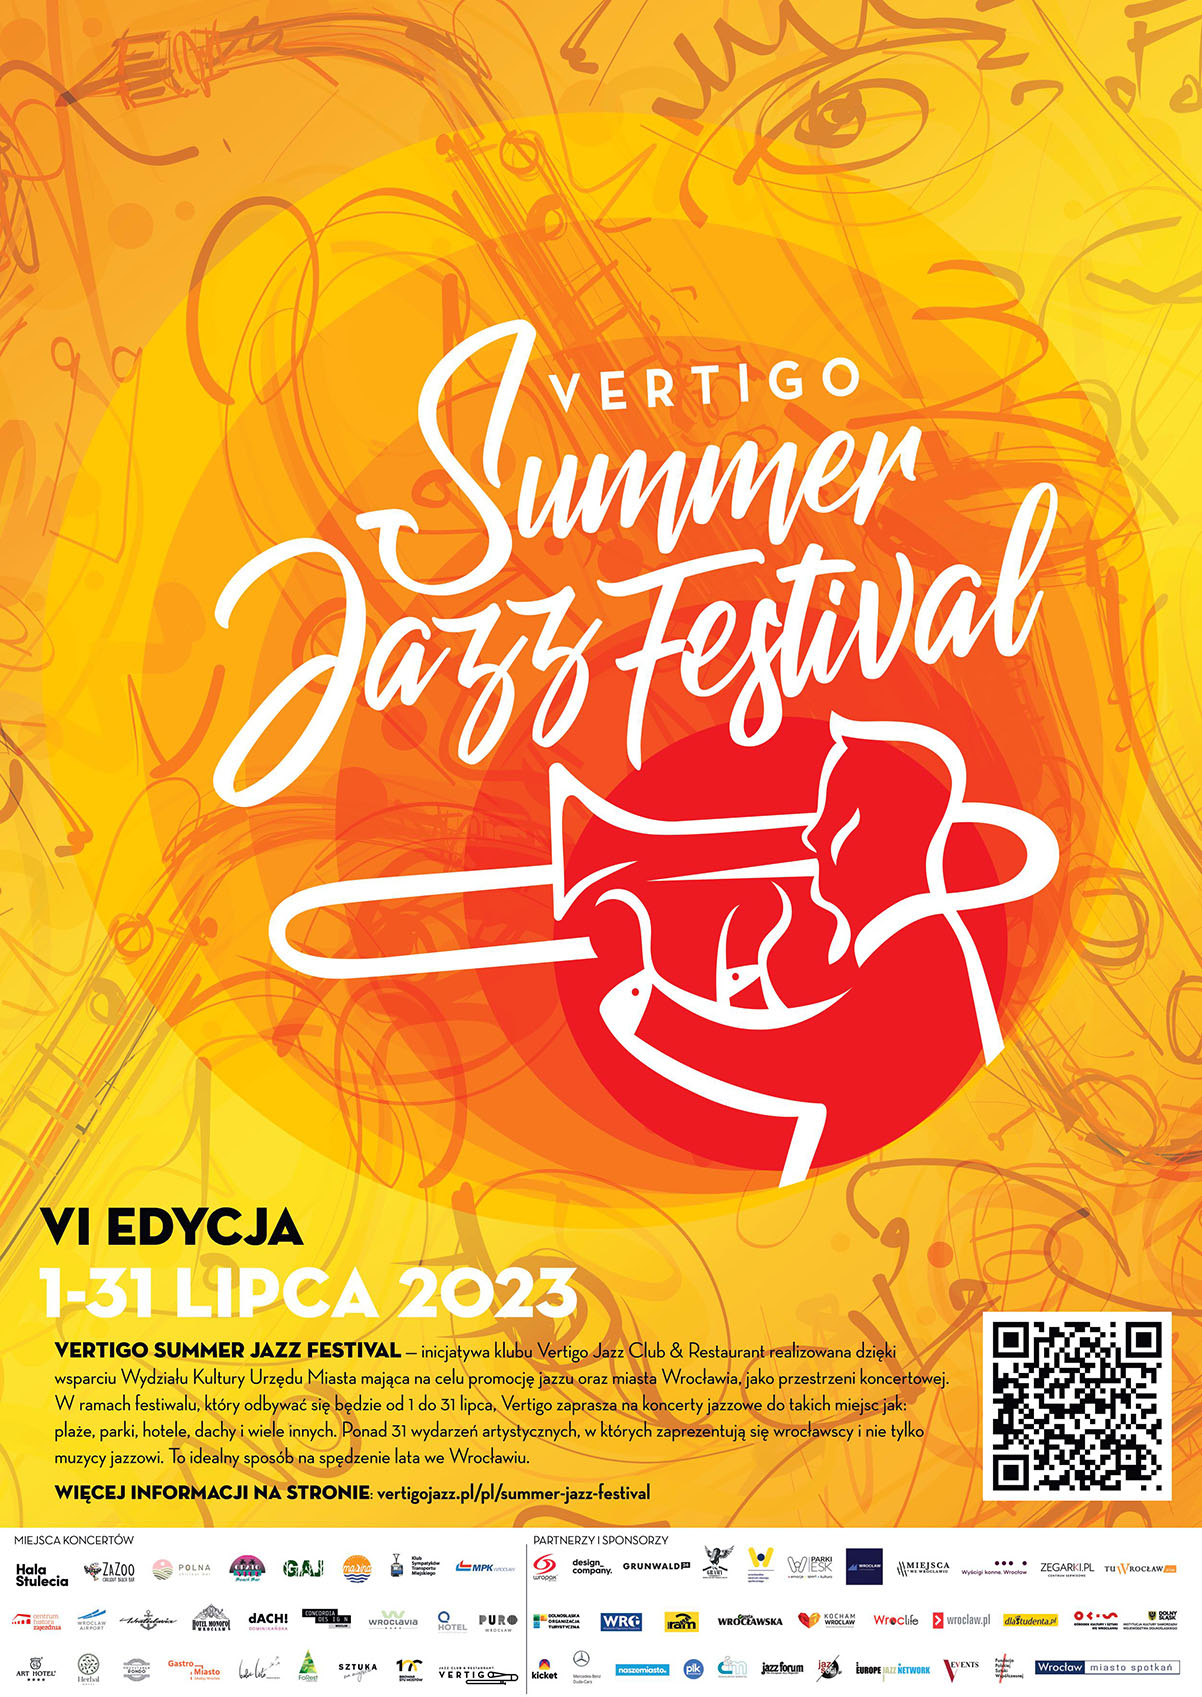 Vertigo-Summer-Jazz-Festiwal-VI-Edycja